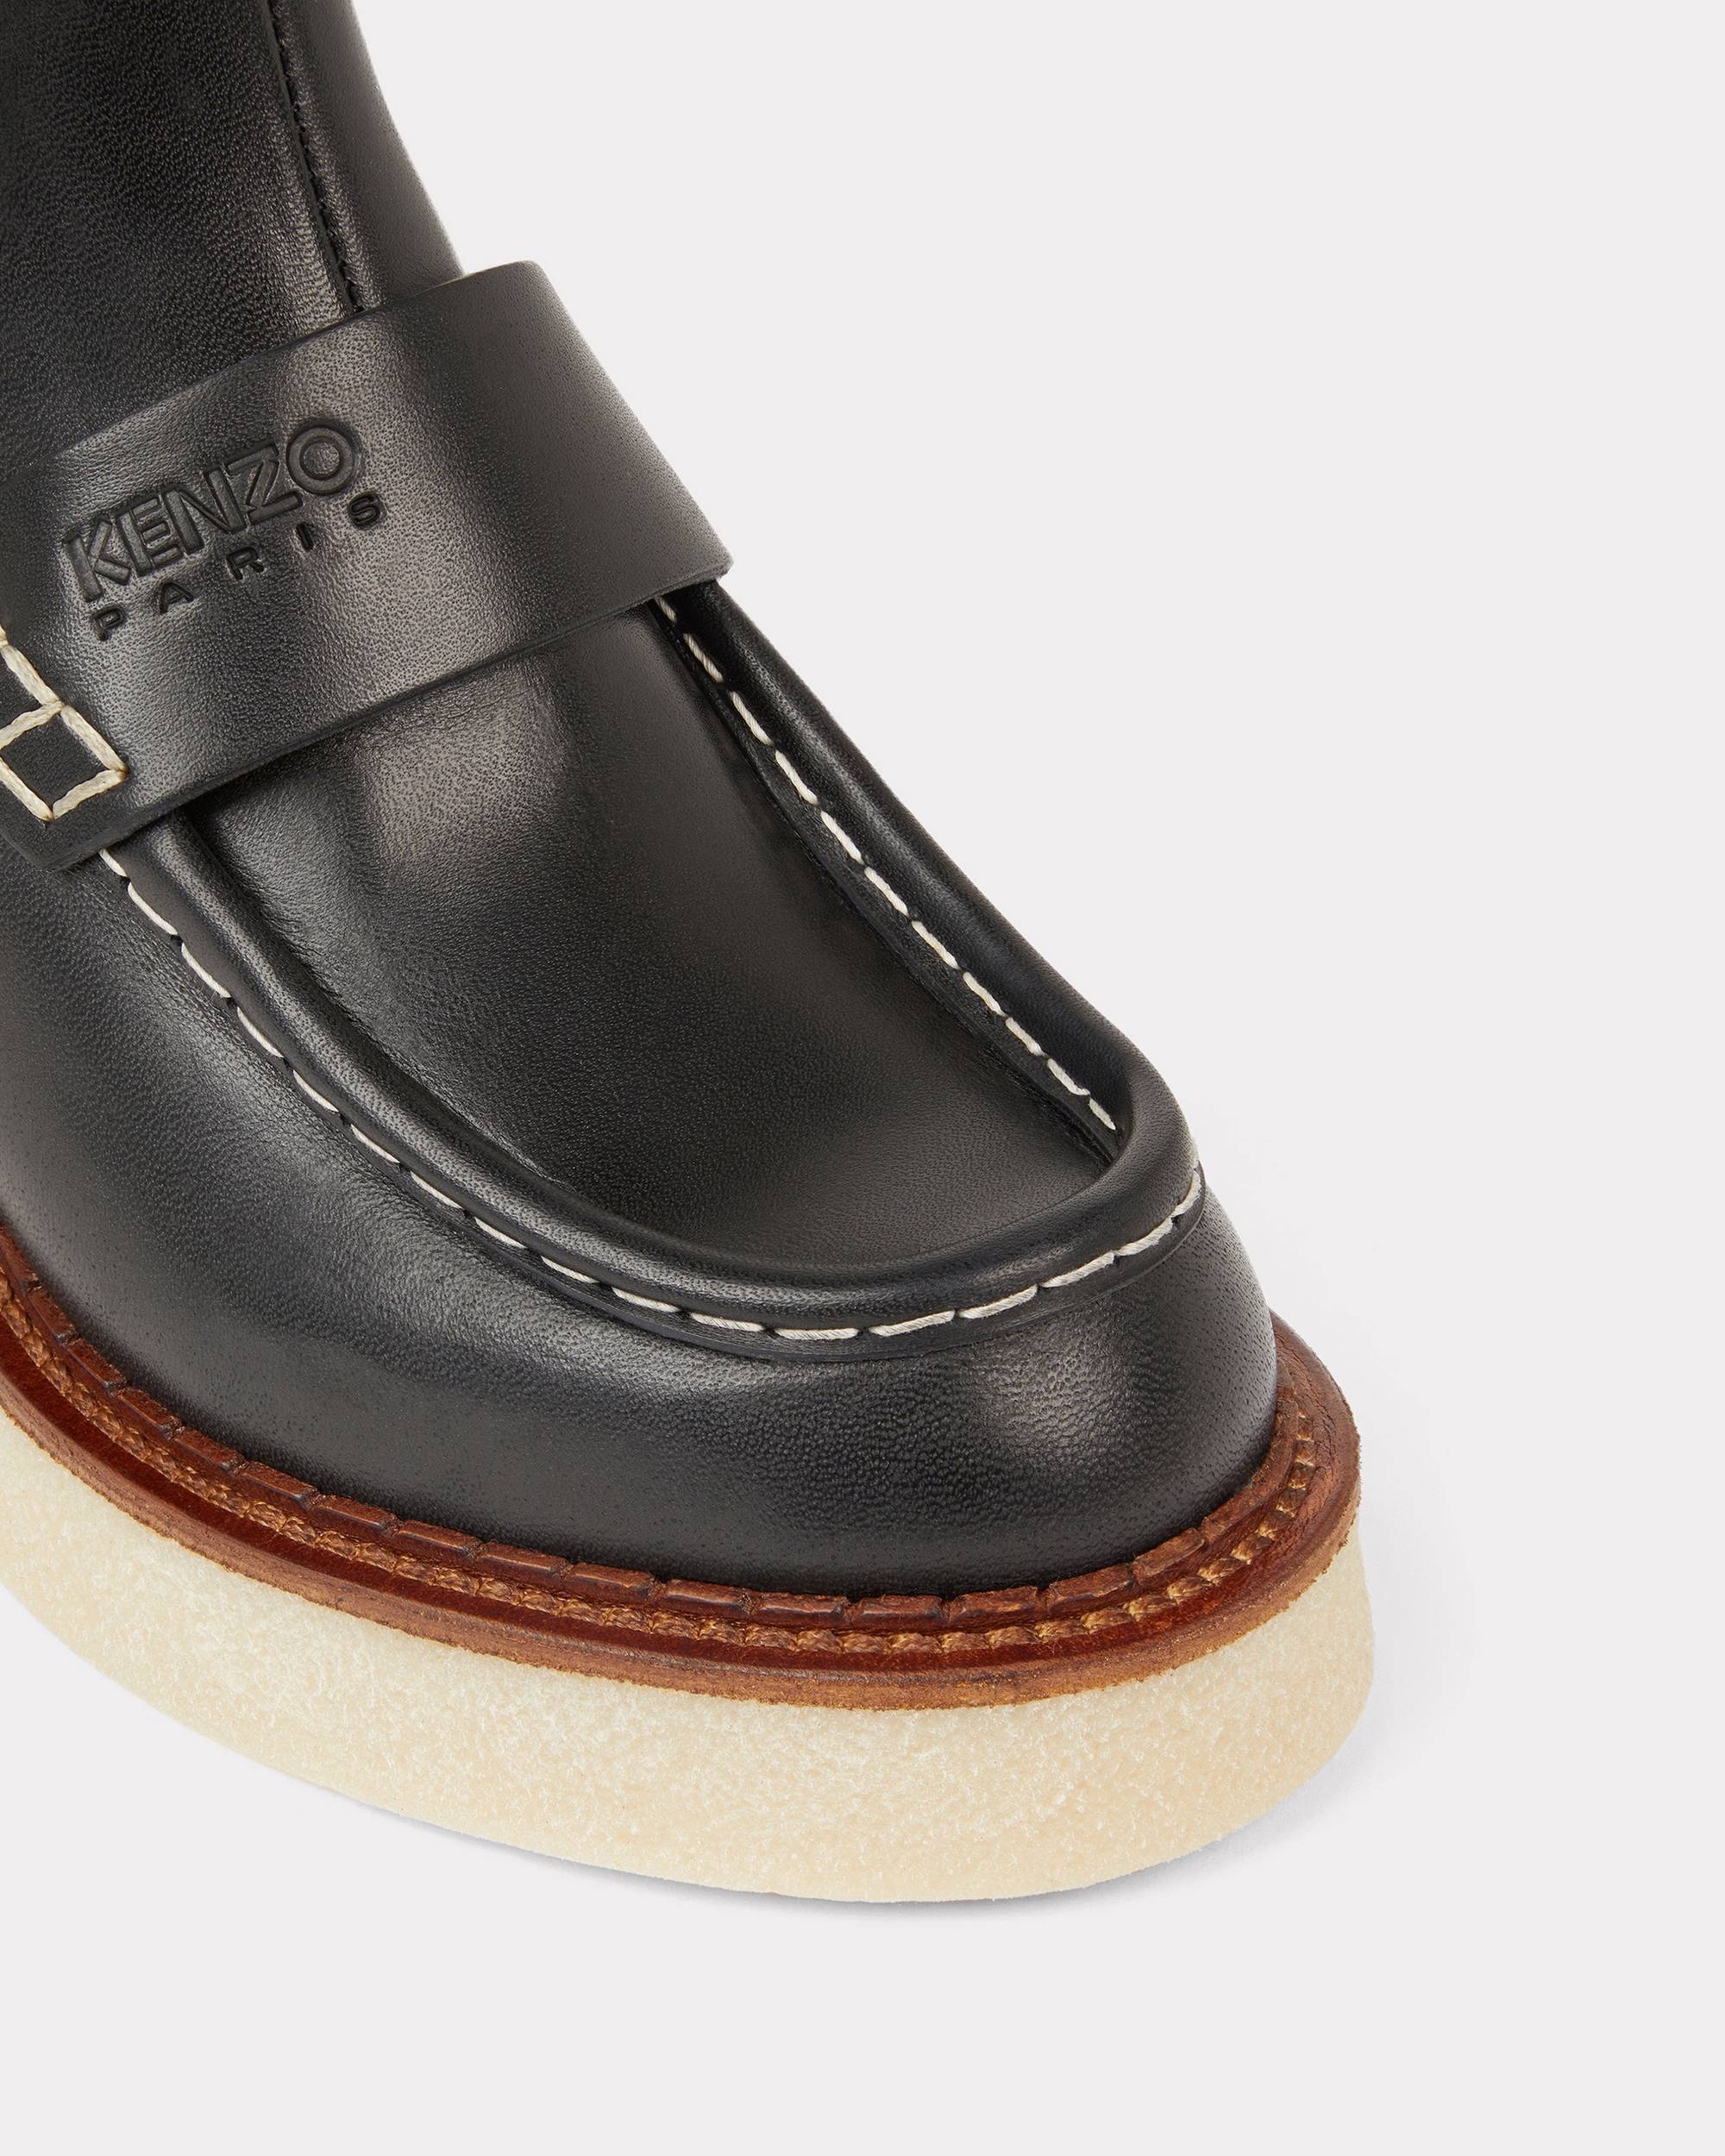 Vegetable-tanned leather KENZOYAMA heeled Chelsea boots - 4